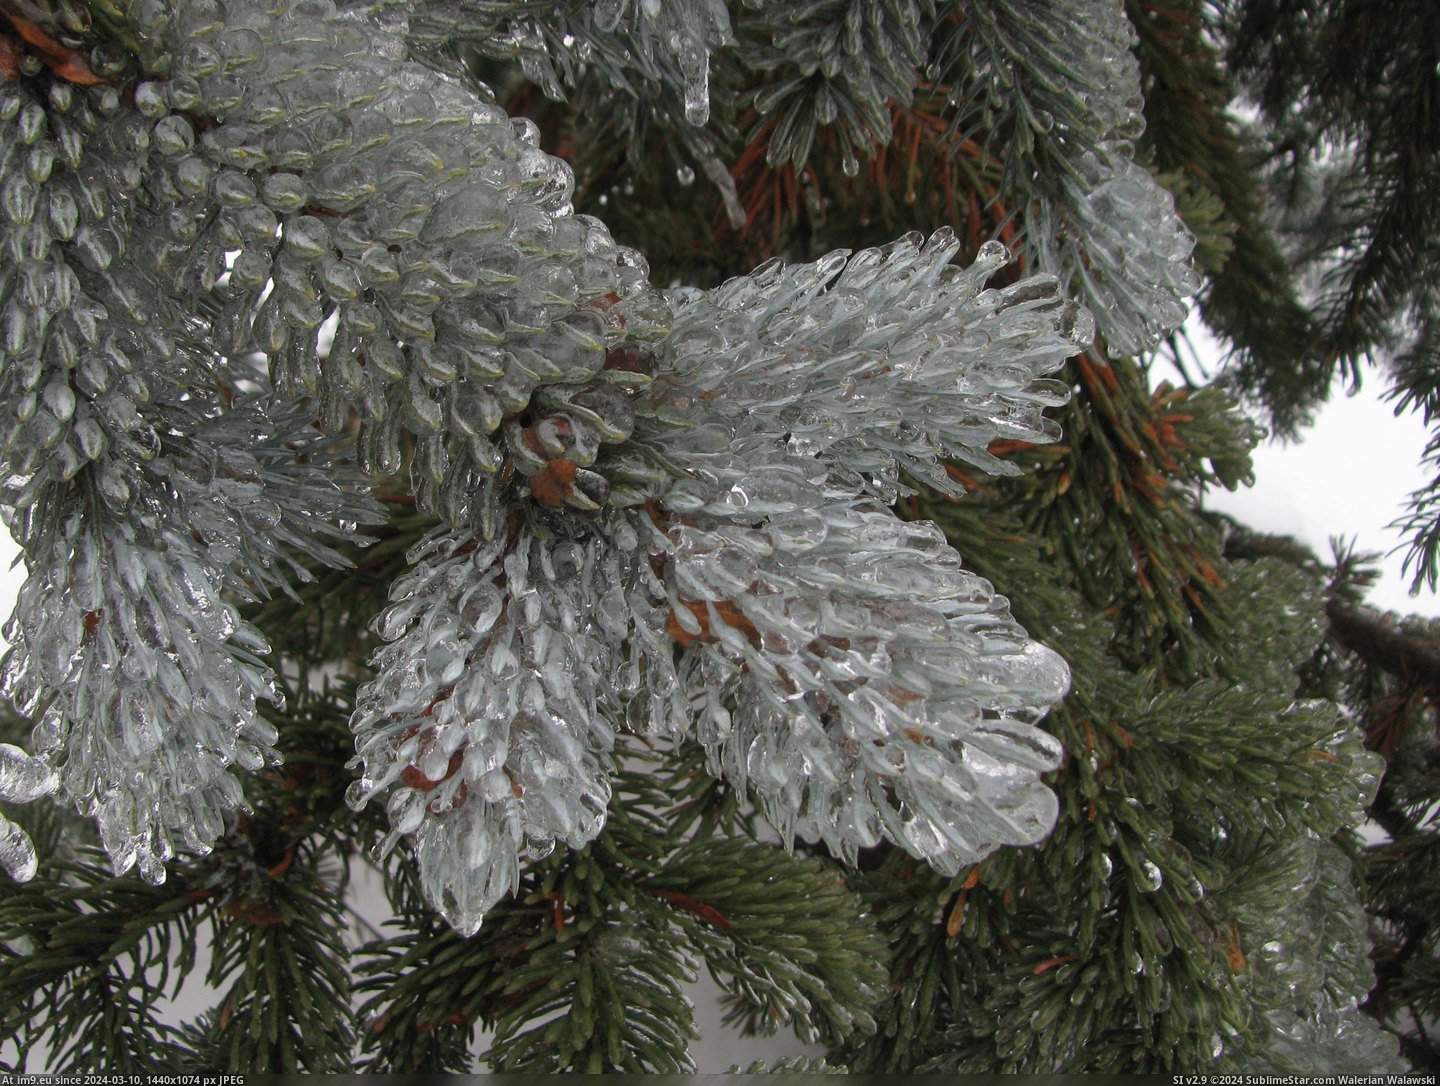 #Tree #Ice #Pine #Encased #Storm #Yard [Pics] The pine tree in my yard is encased in ice after a storm. Pic. (Bild von album My r/PICS favs))